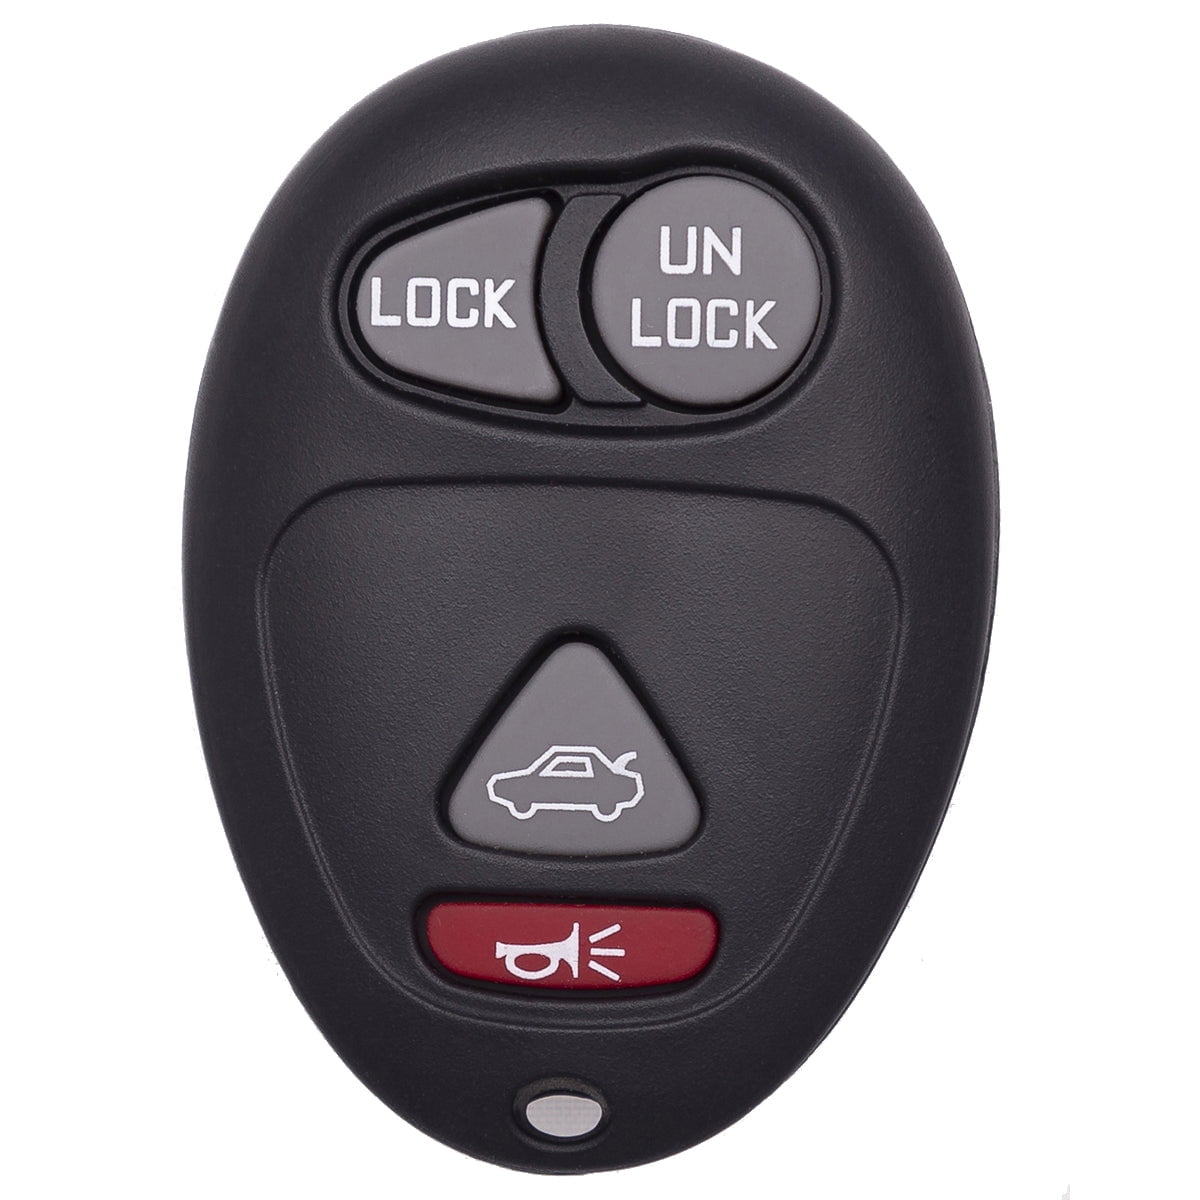 2002 Buick Rendevous keyless remote entry key fob car control transmitter alarm 